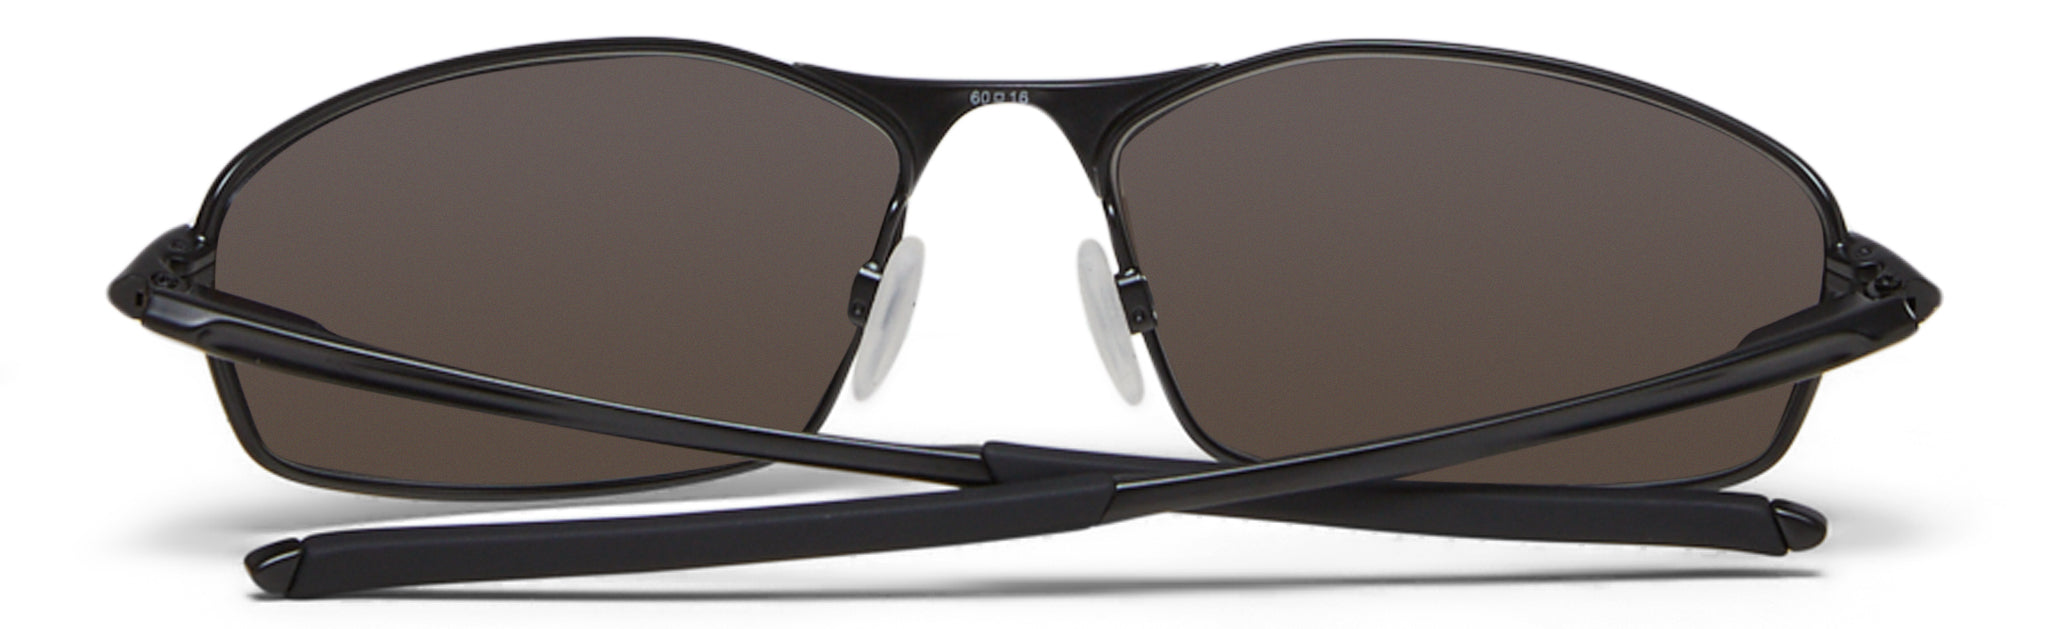 Oakley Whisker Sunglasses - Satin Black - Prizm Black Iridium Polarized Lens  | Altitude Sports